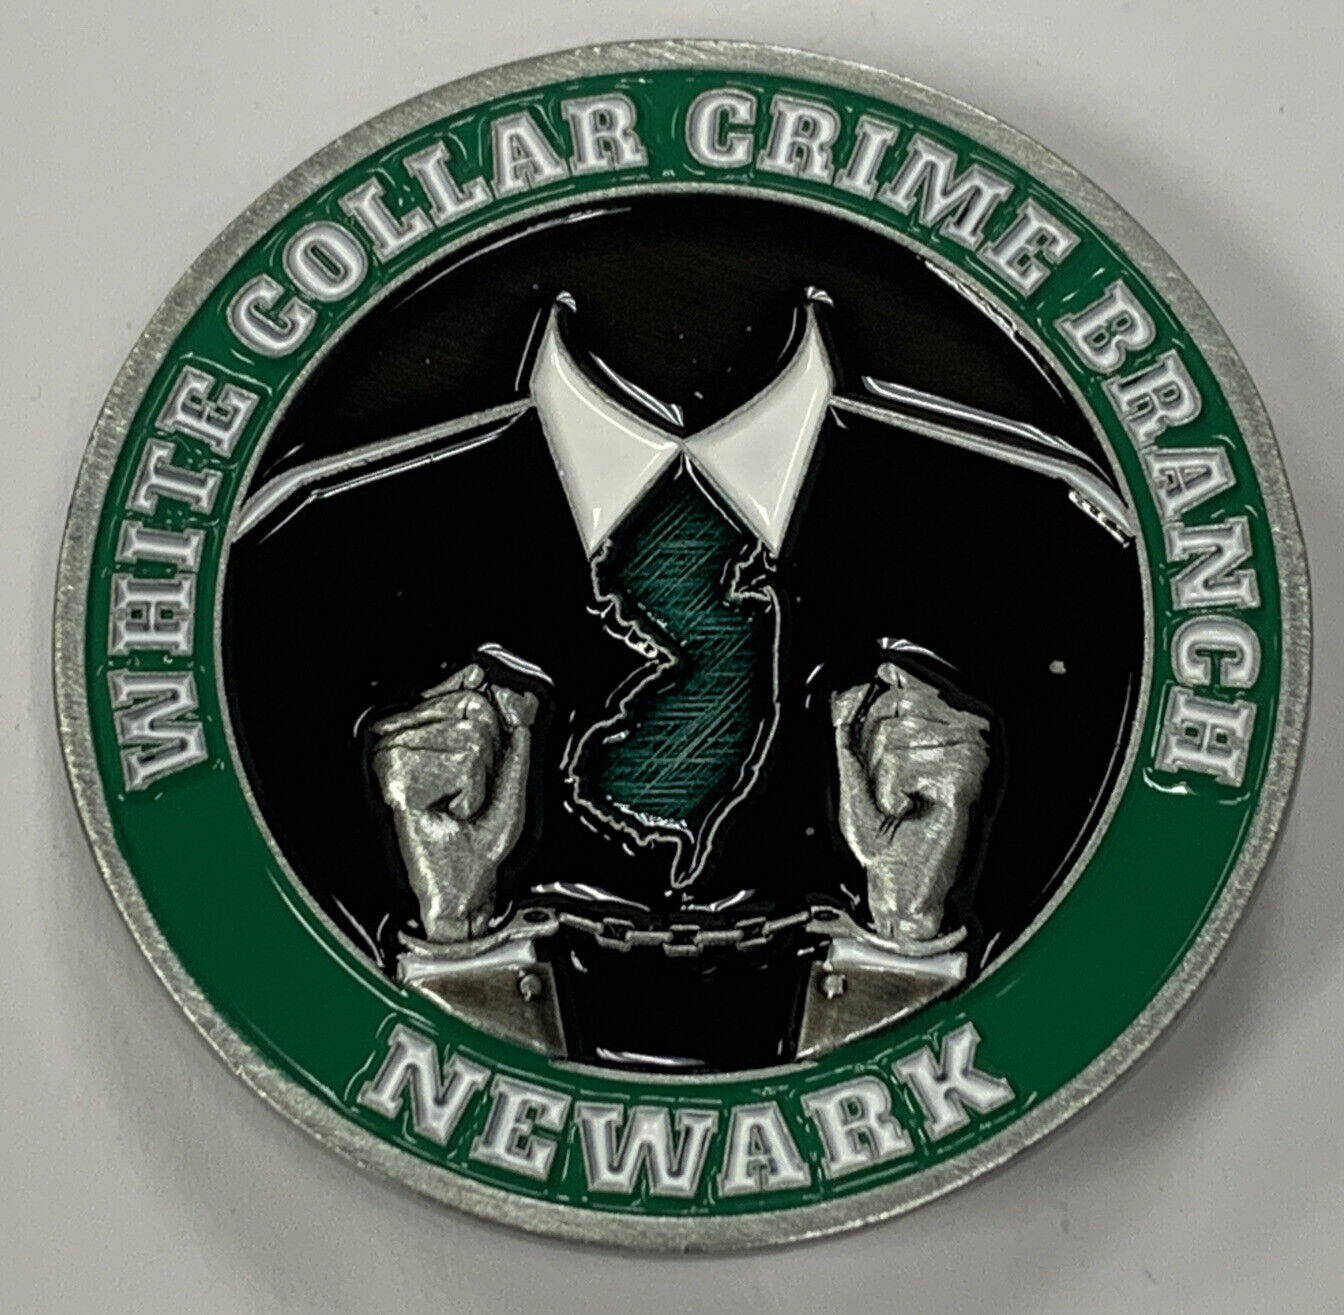 FBI Newark  White Collar Crime Branch challenge coin